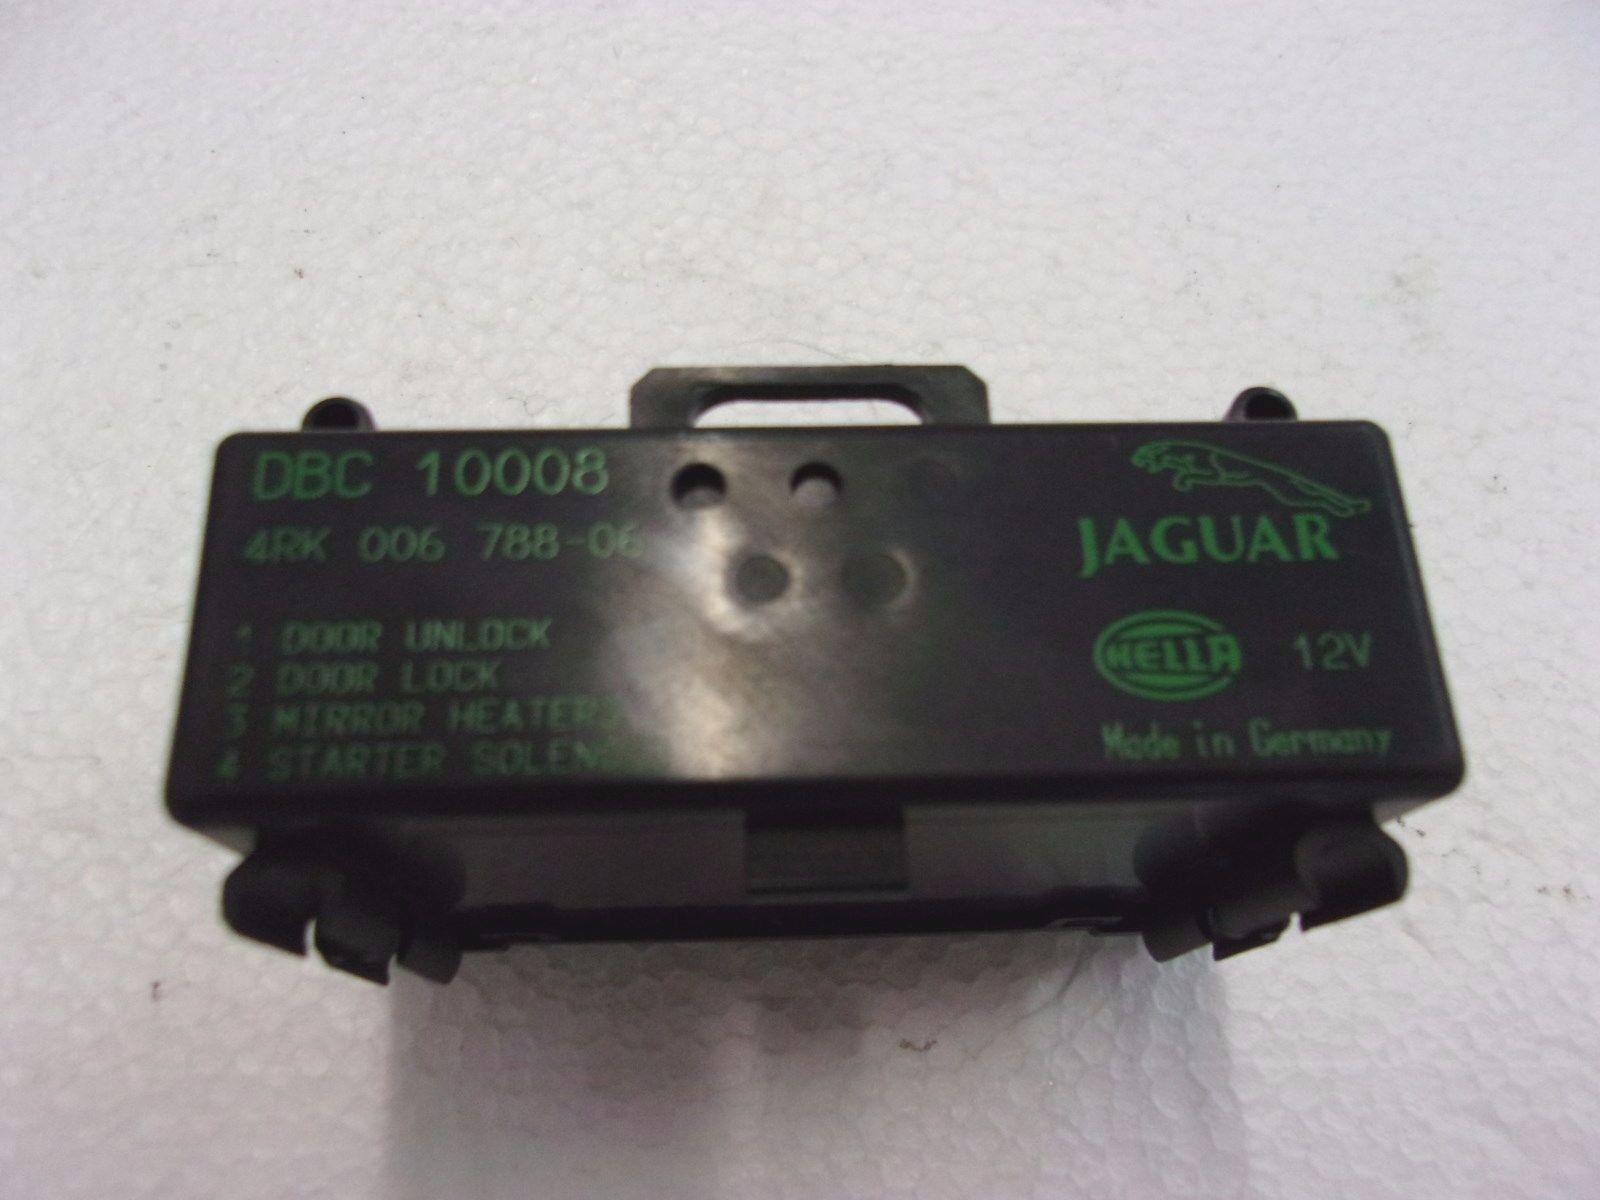 Jaguar XJ6 VandenPlas 1993 to 1994 Starter Motor Relay Module DBC10008